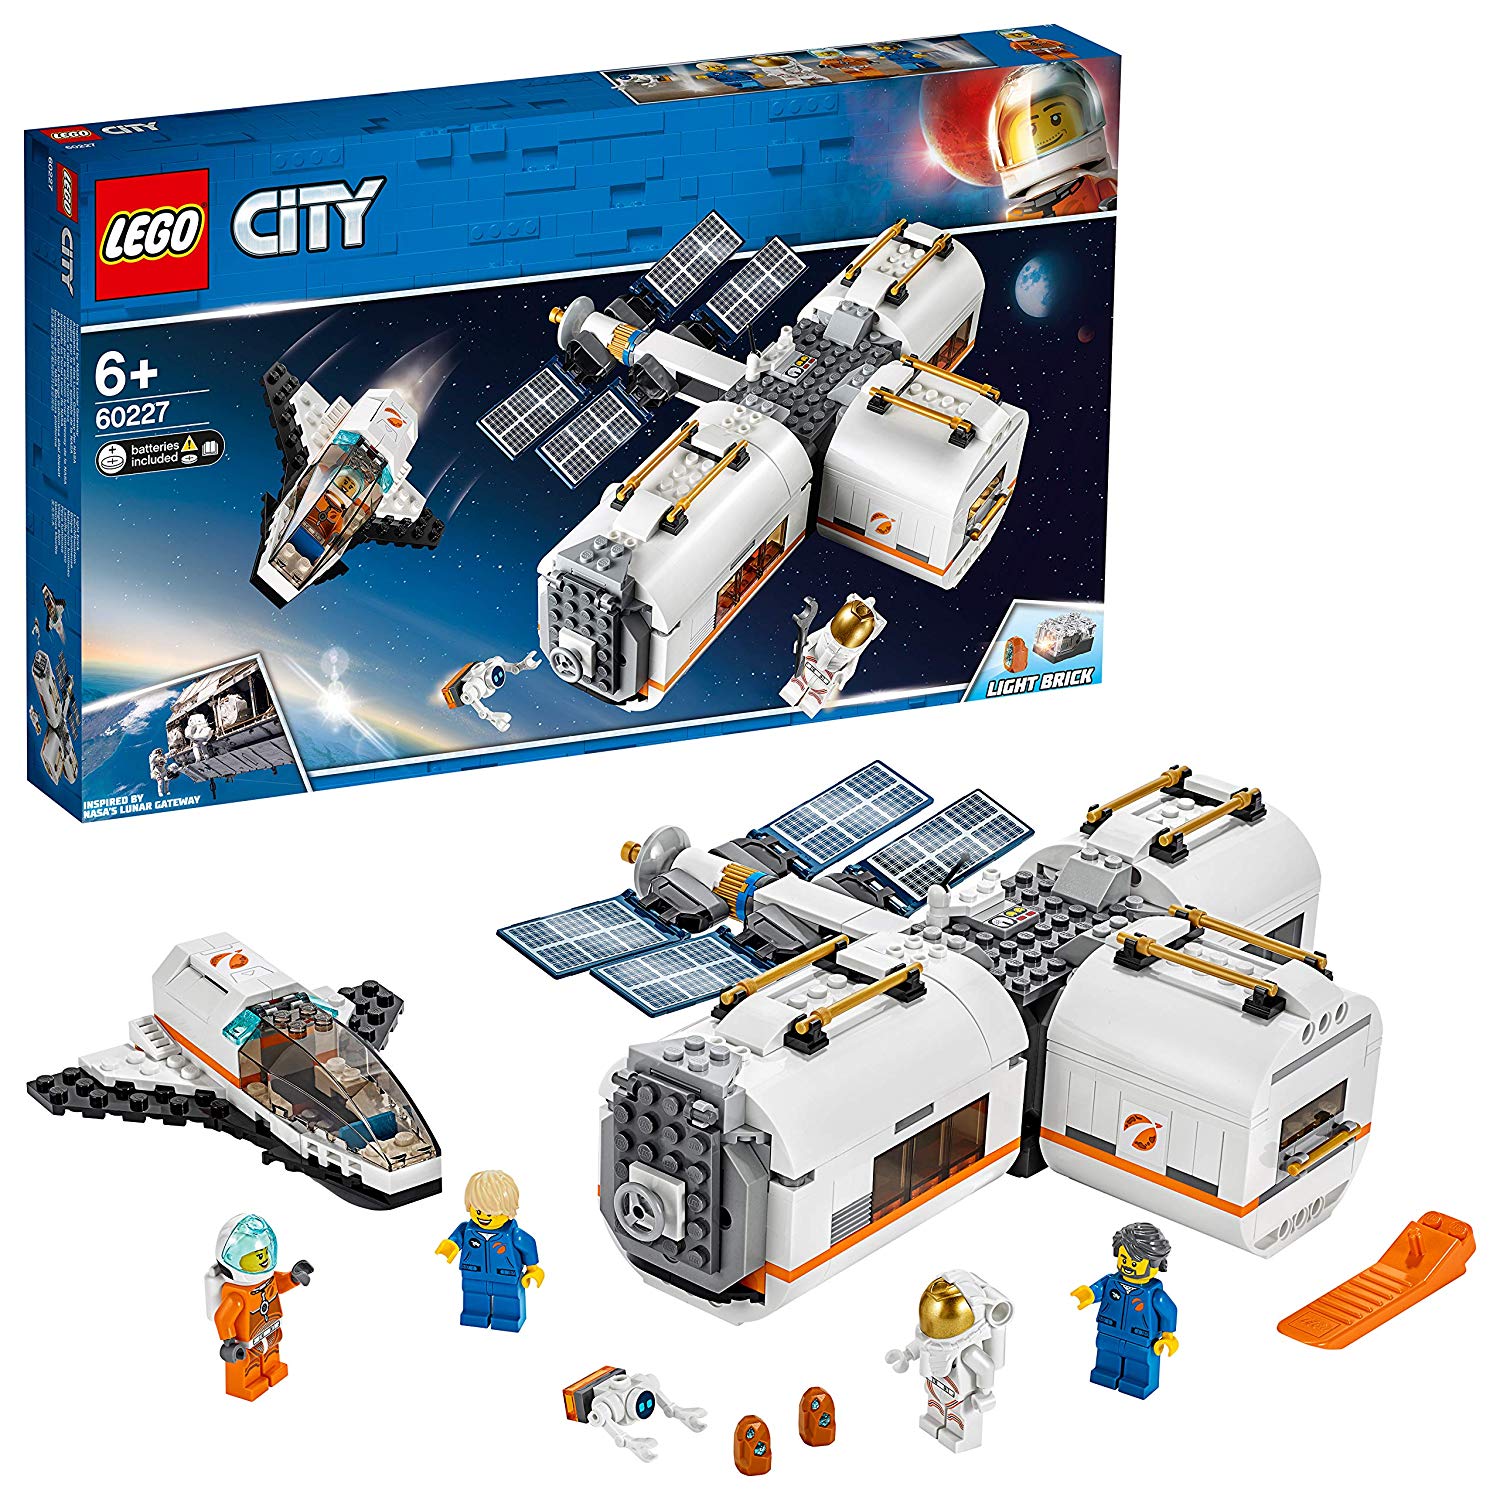 Lego 60227 - City Mond Raumstation, Bauset